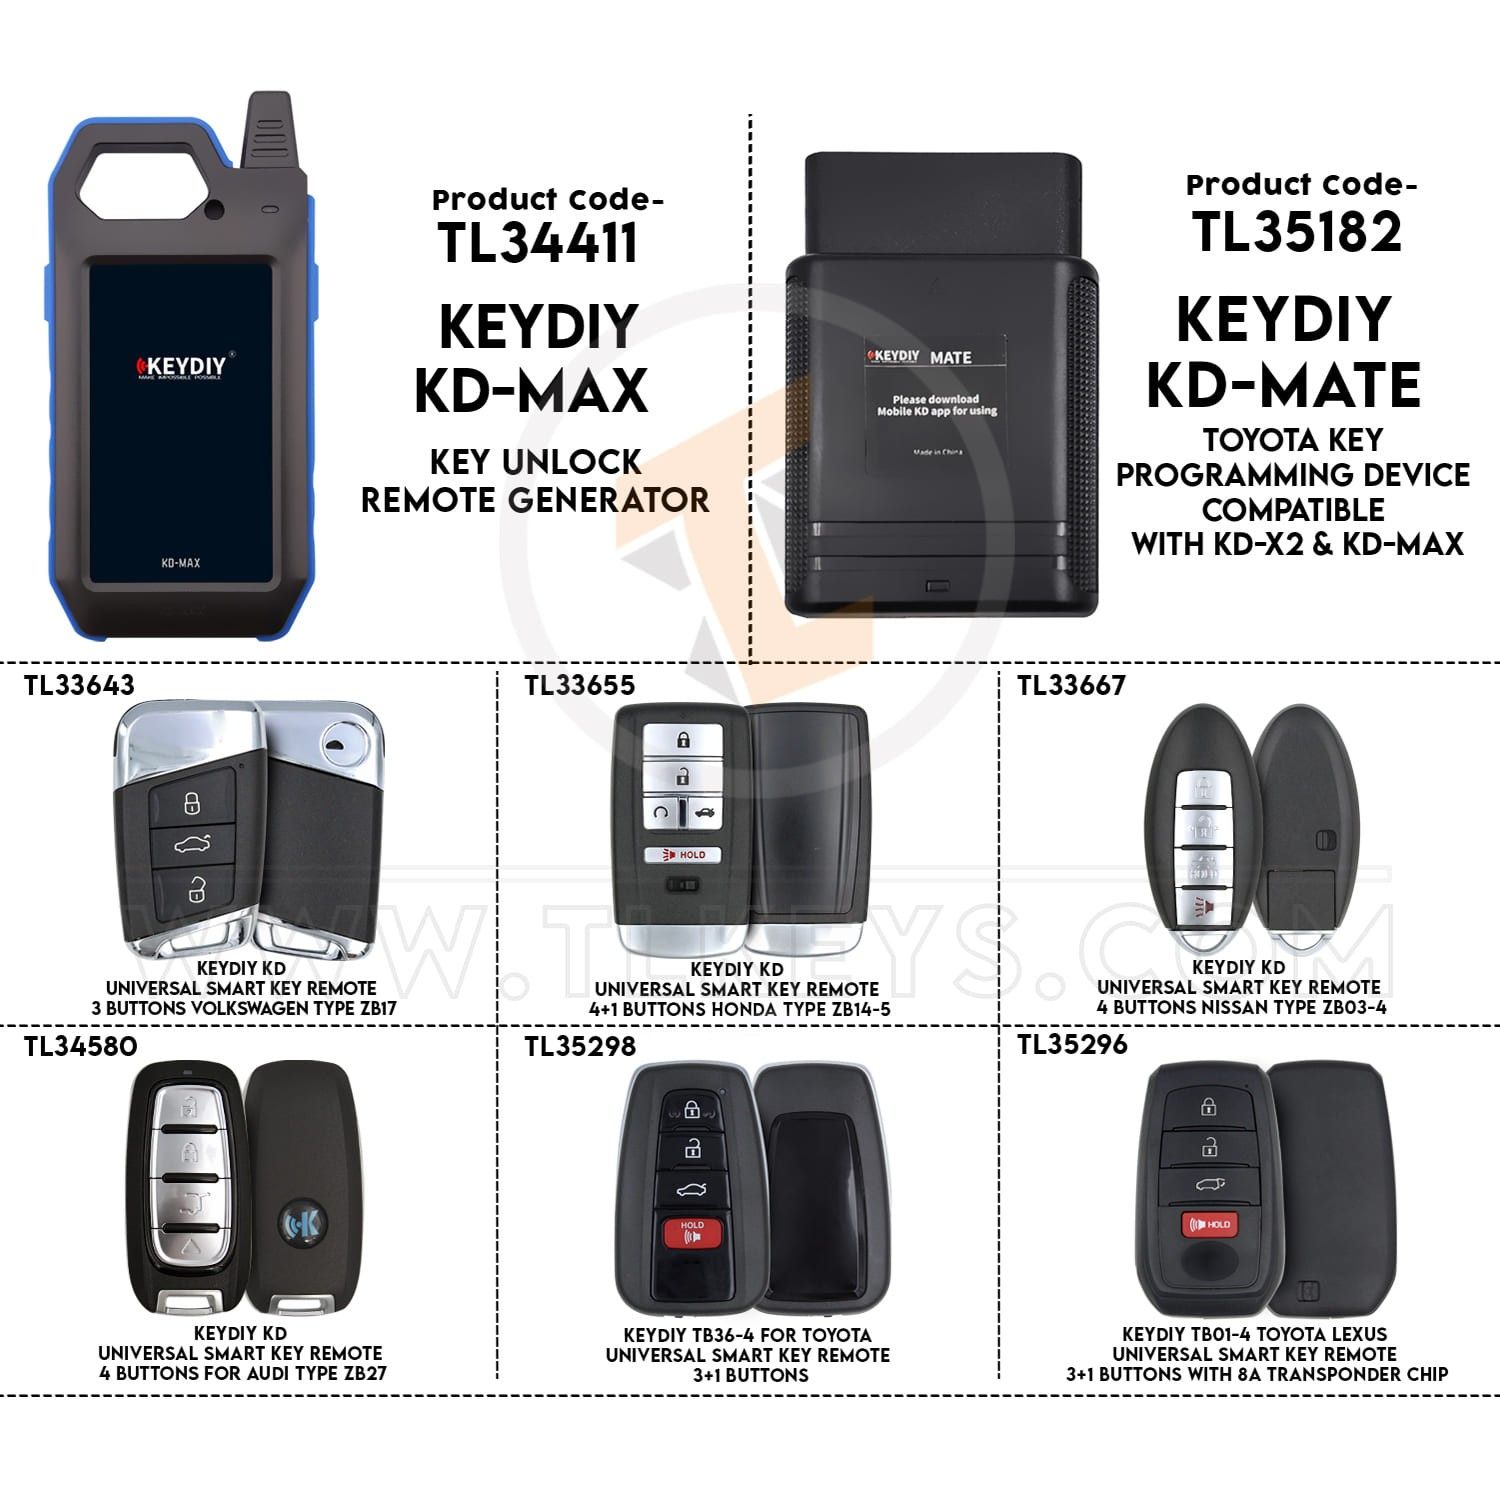 KeyDiy KD KeyDIY Tools Smart Key Remotes KD-Max KD-Mate